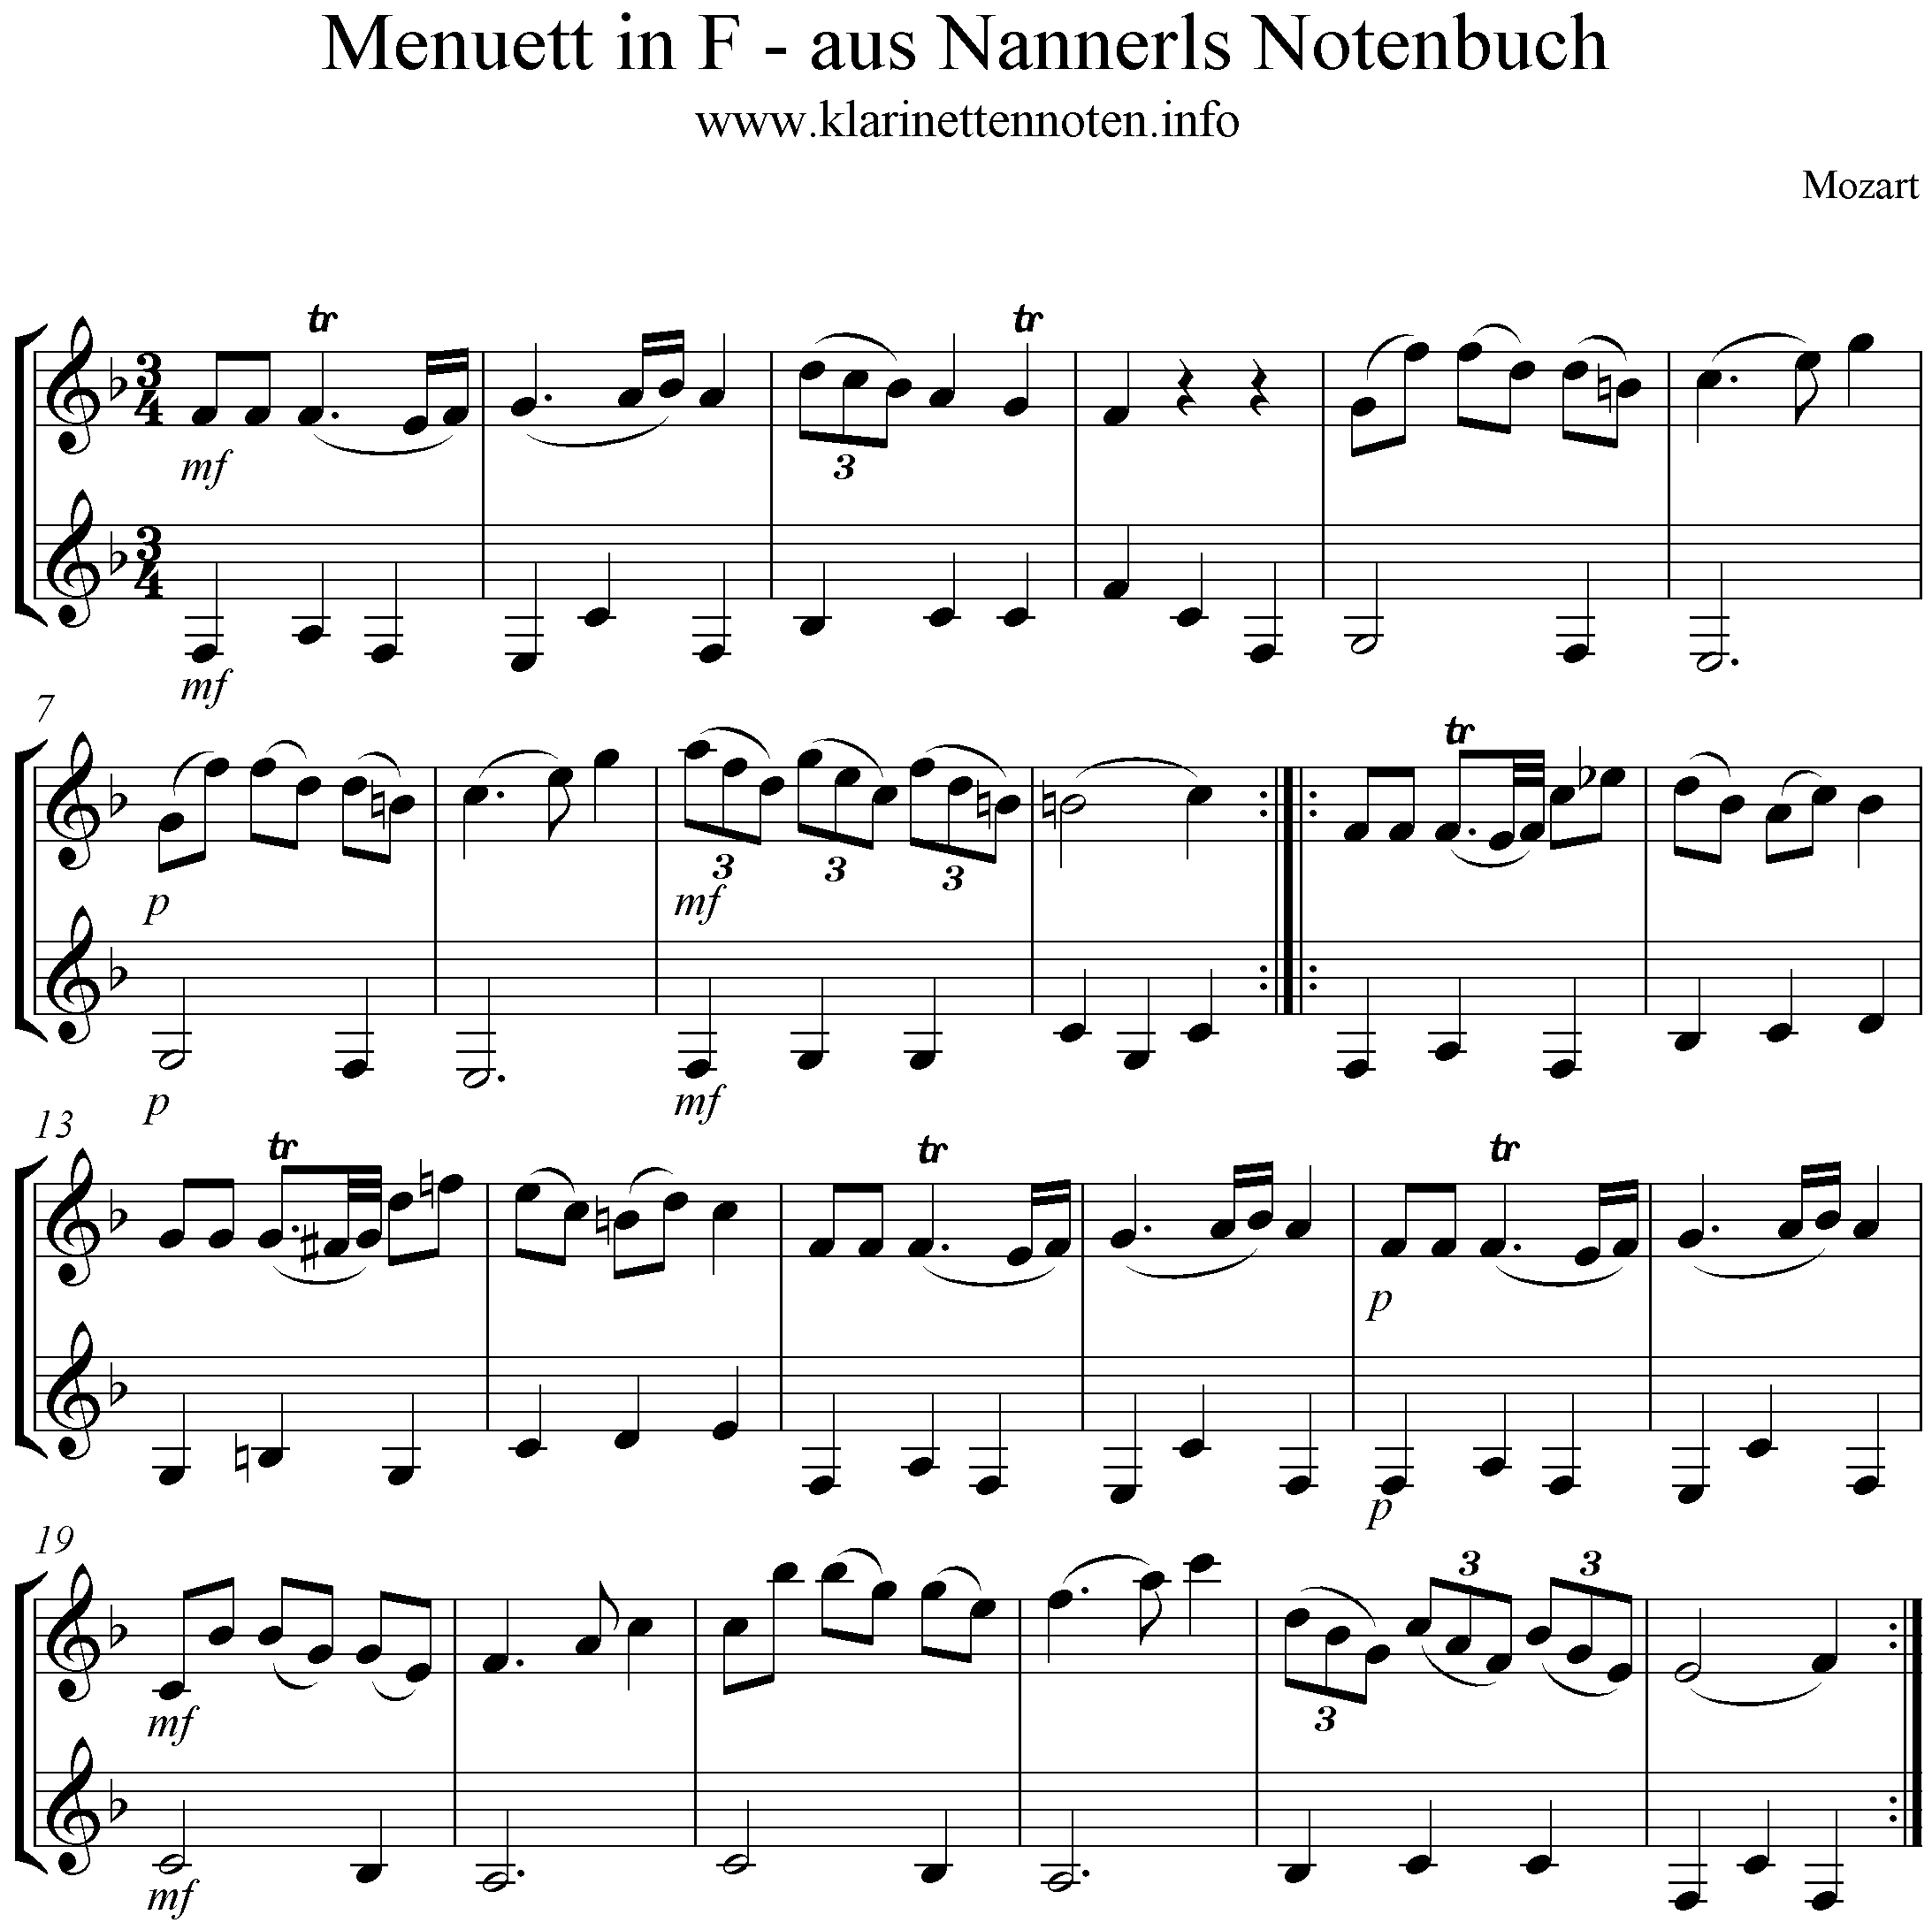 Clarinet Duo-Mozart Menuett in F, Nannerls Notenbuch